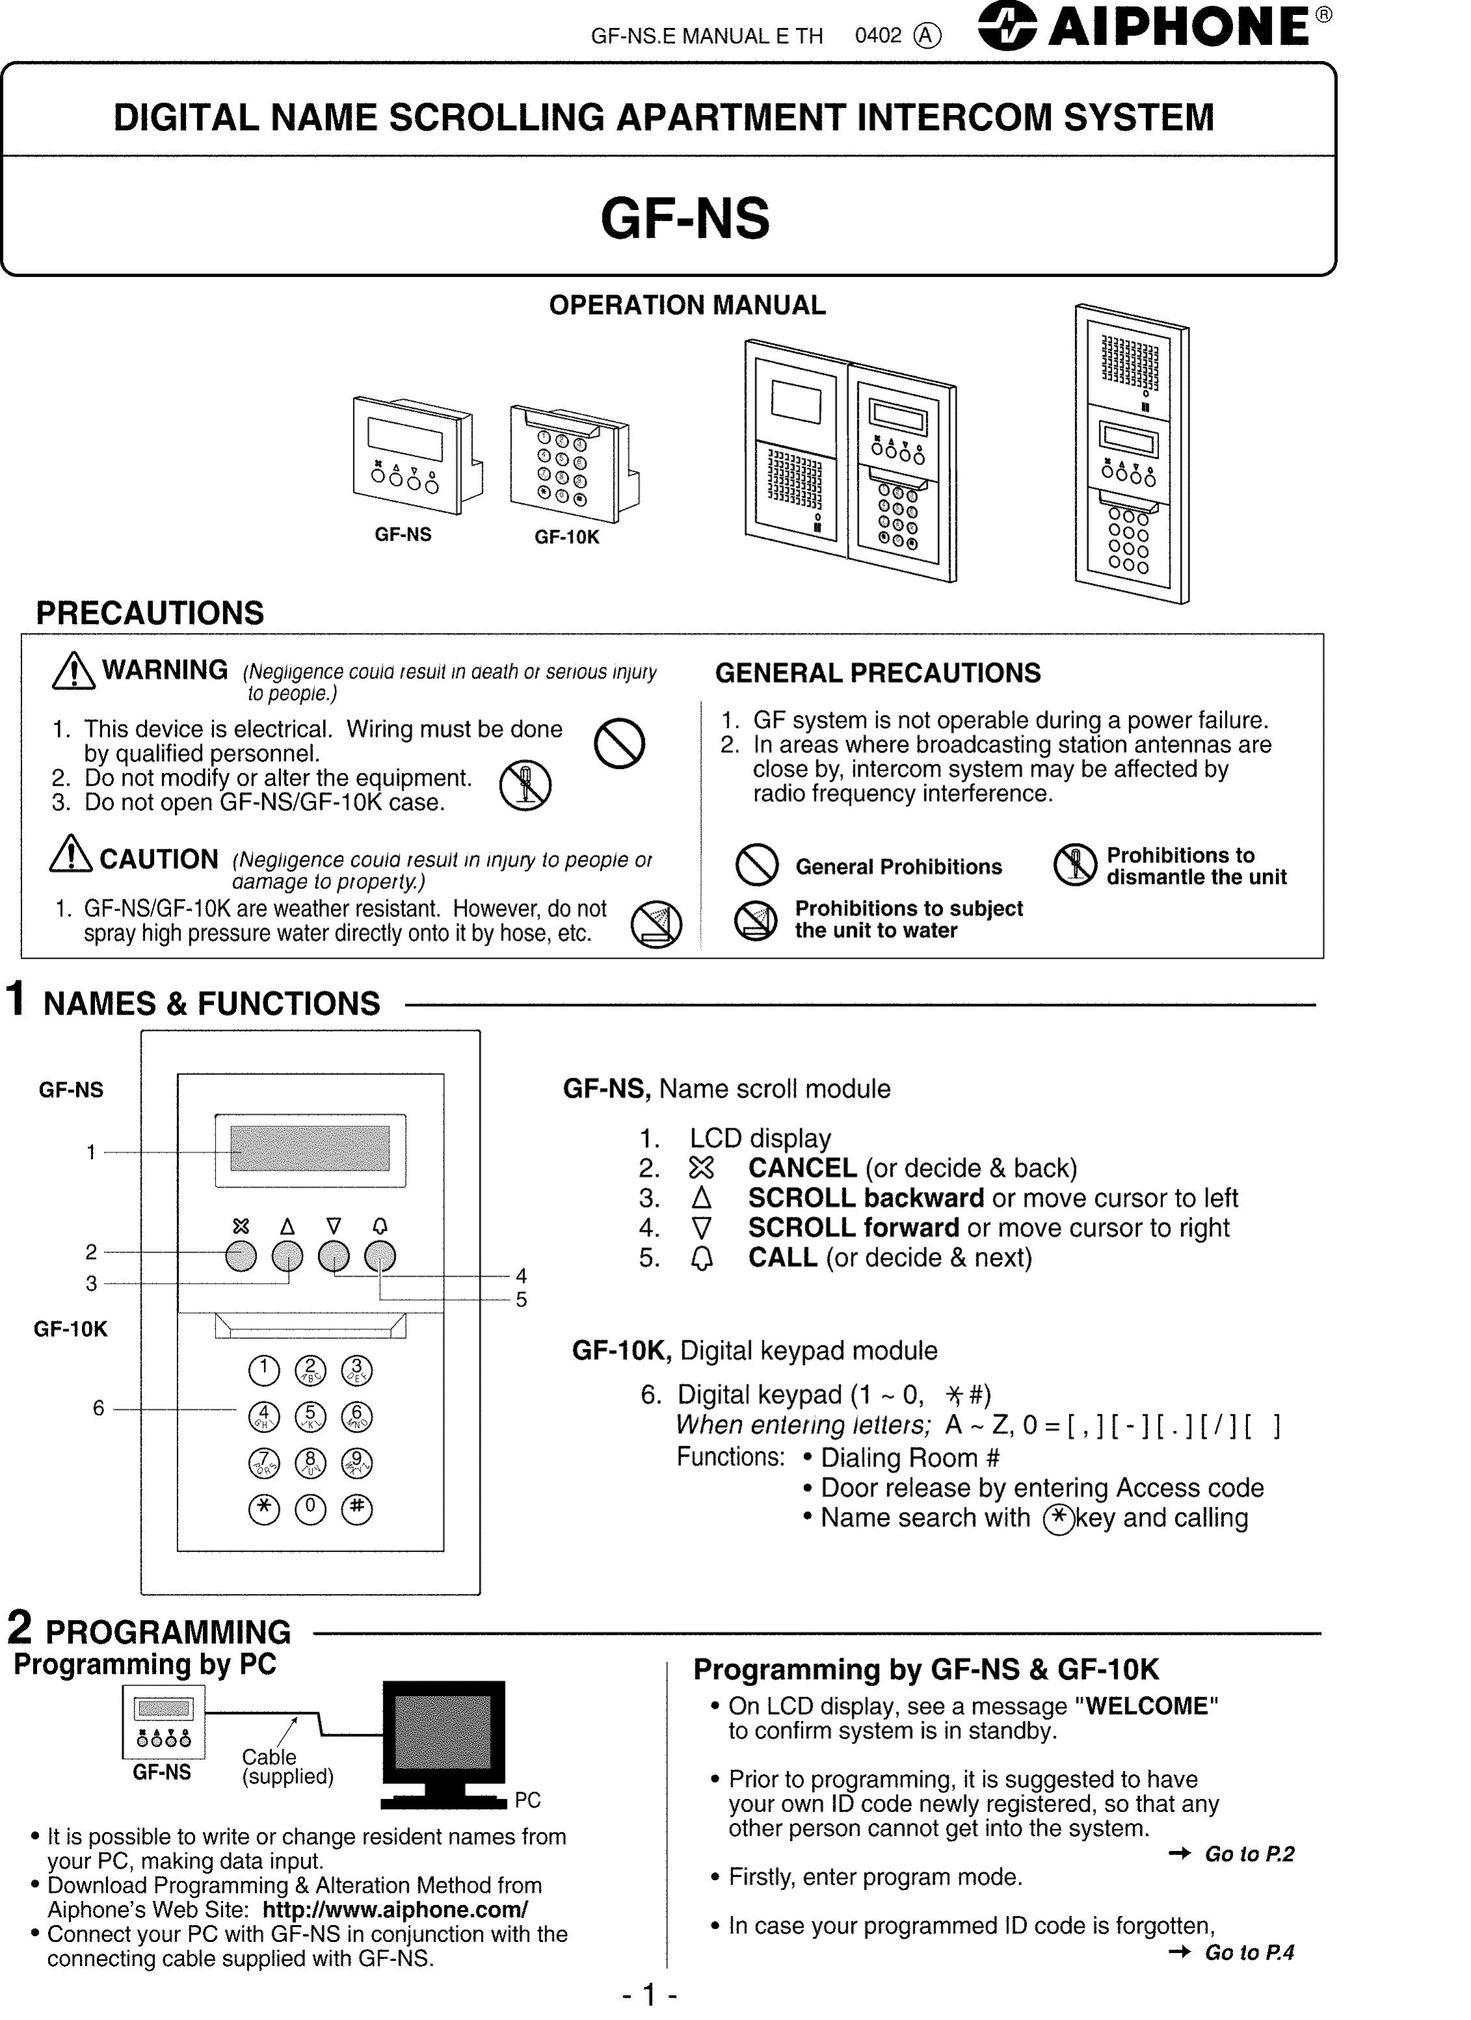 Aiphone GF-10K Intercom System User Manual